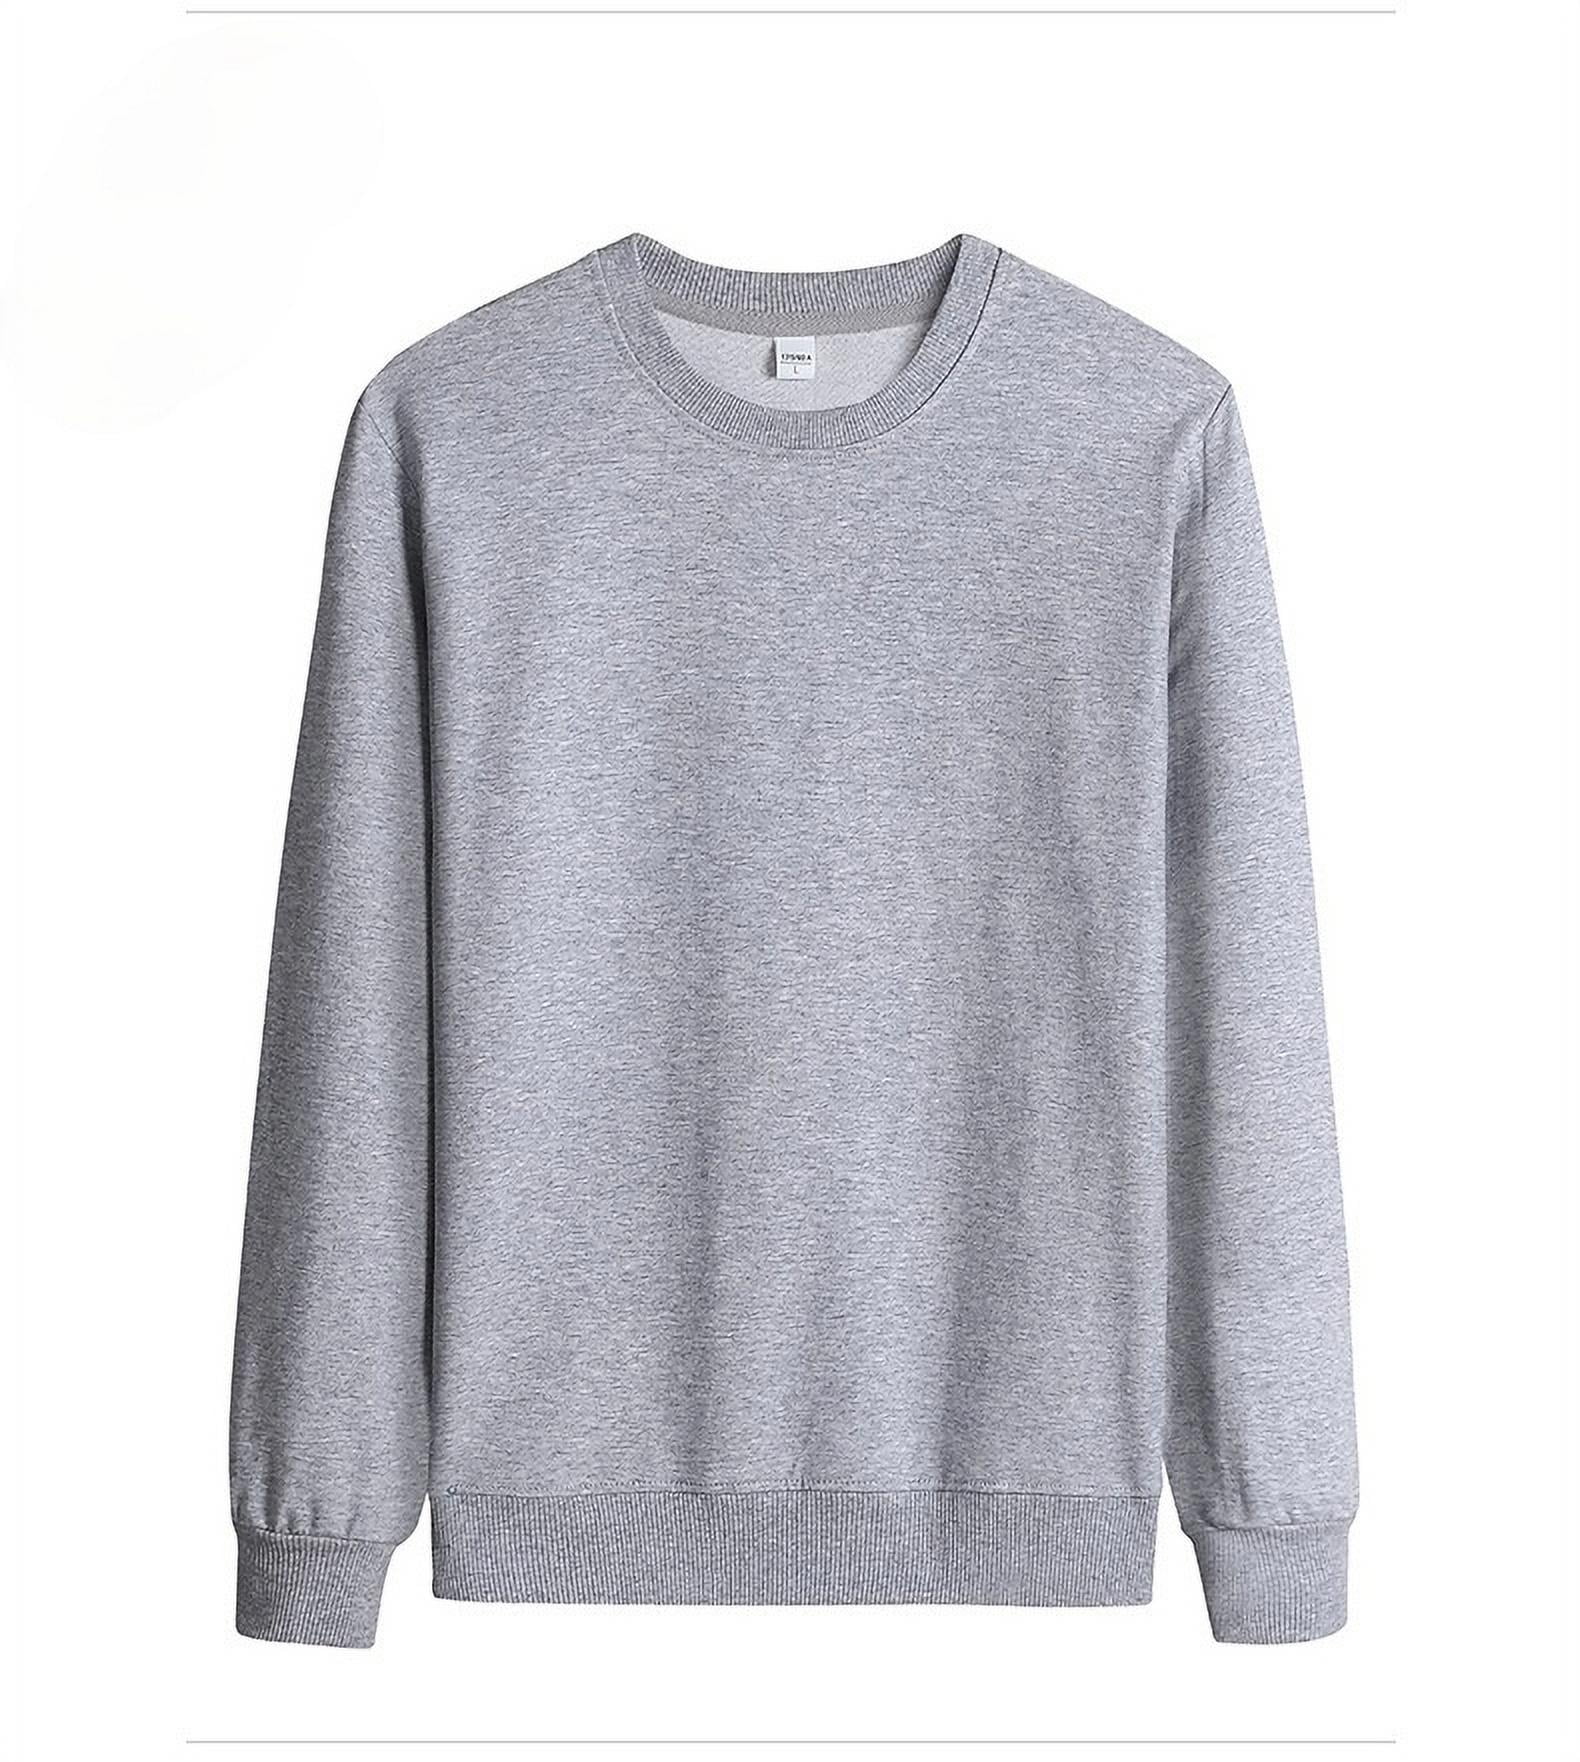 Plain Crewn Neck Sweatshirt, Light Grey